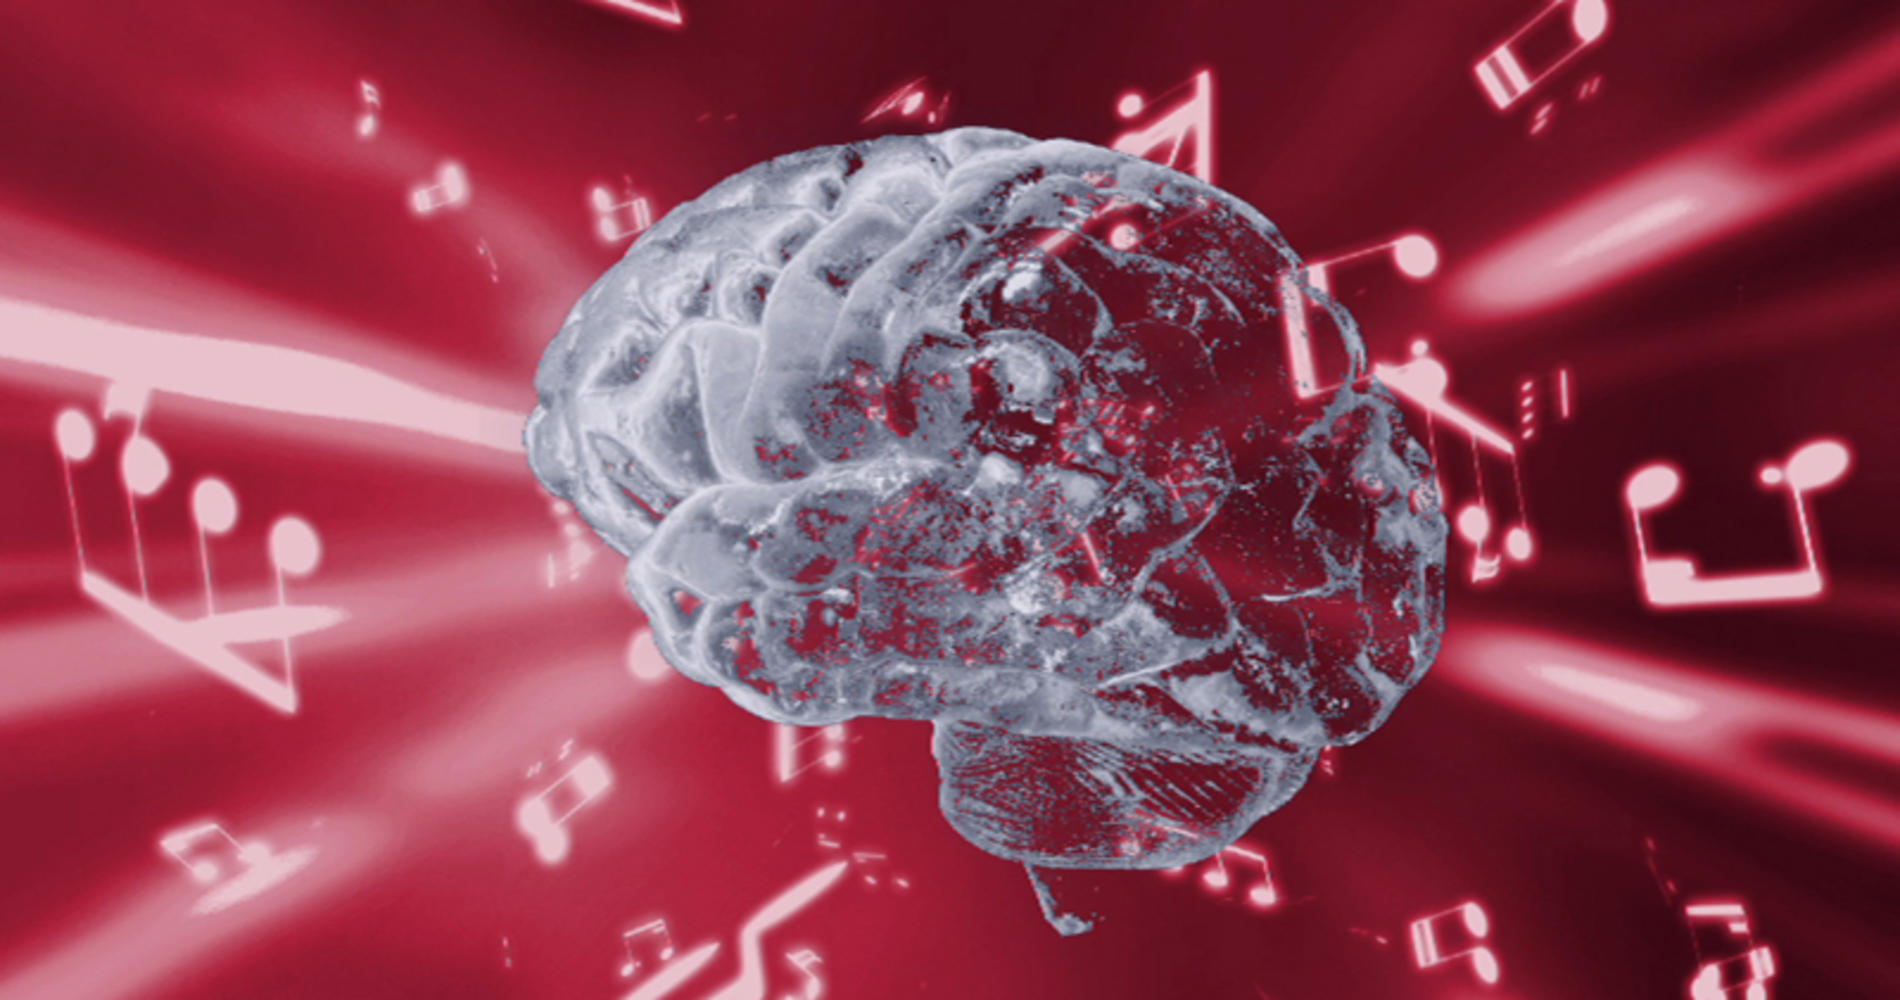 Музыка головного мозга